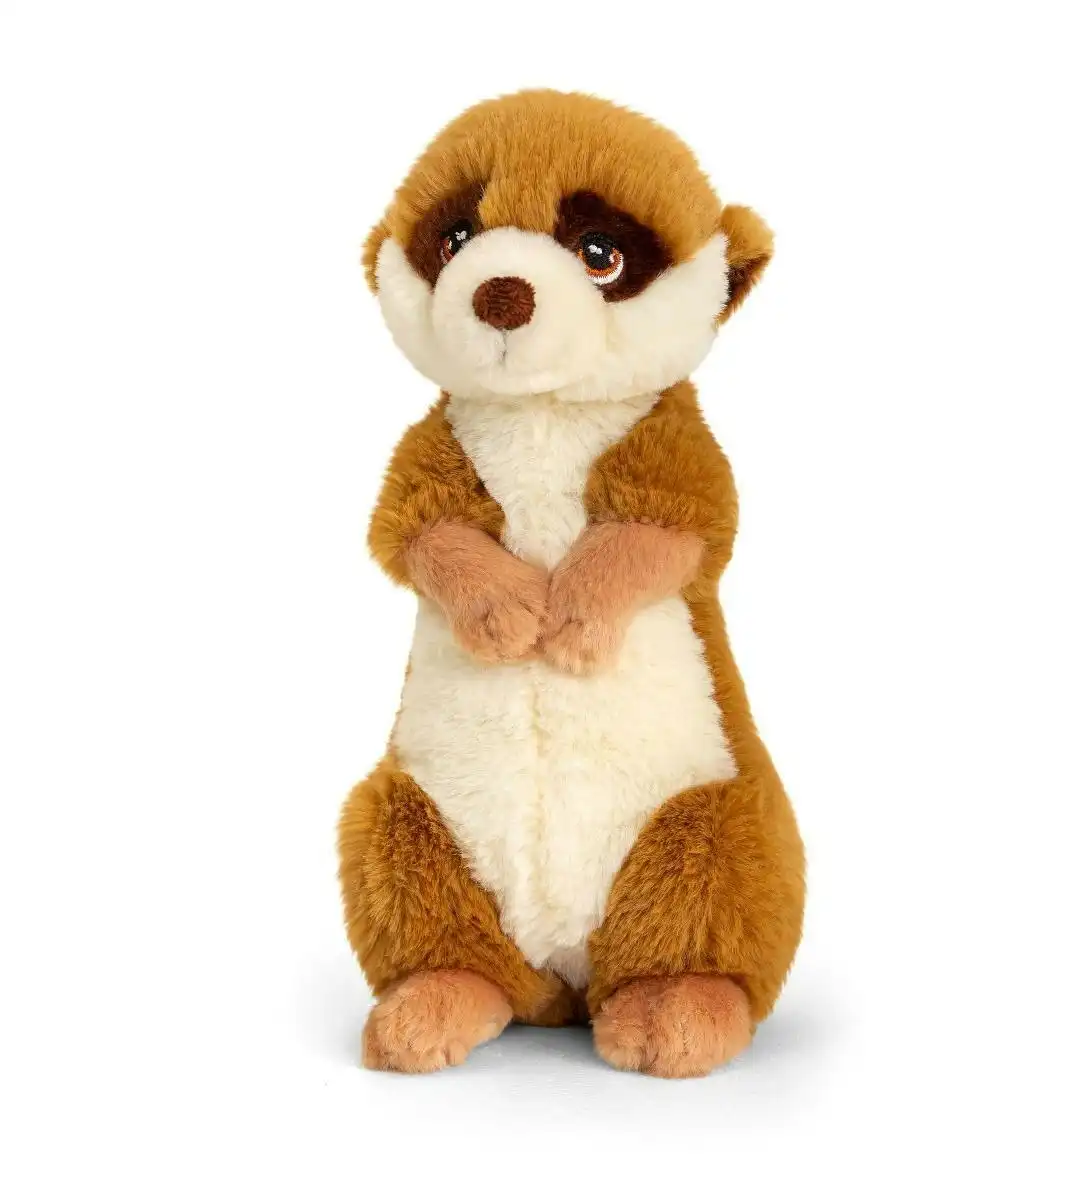 Keeleco 22cm Meerkat Kids/Children Animal Soft Plush Stuffed Toy Brown 3y+